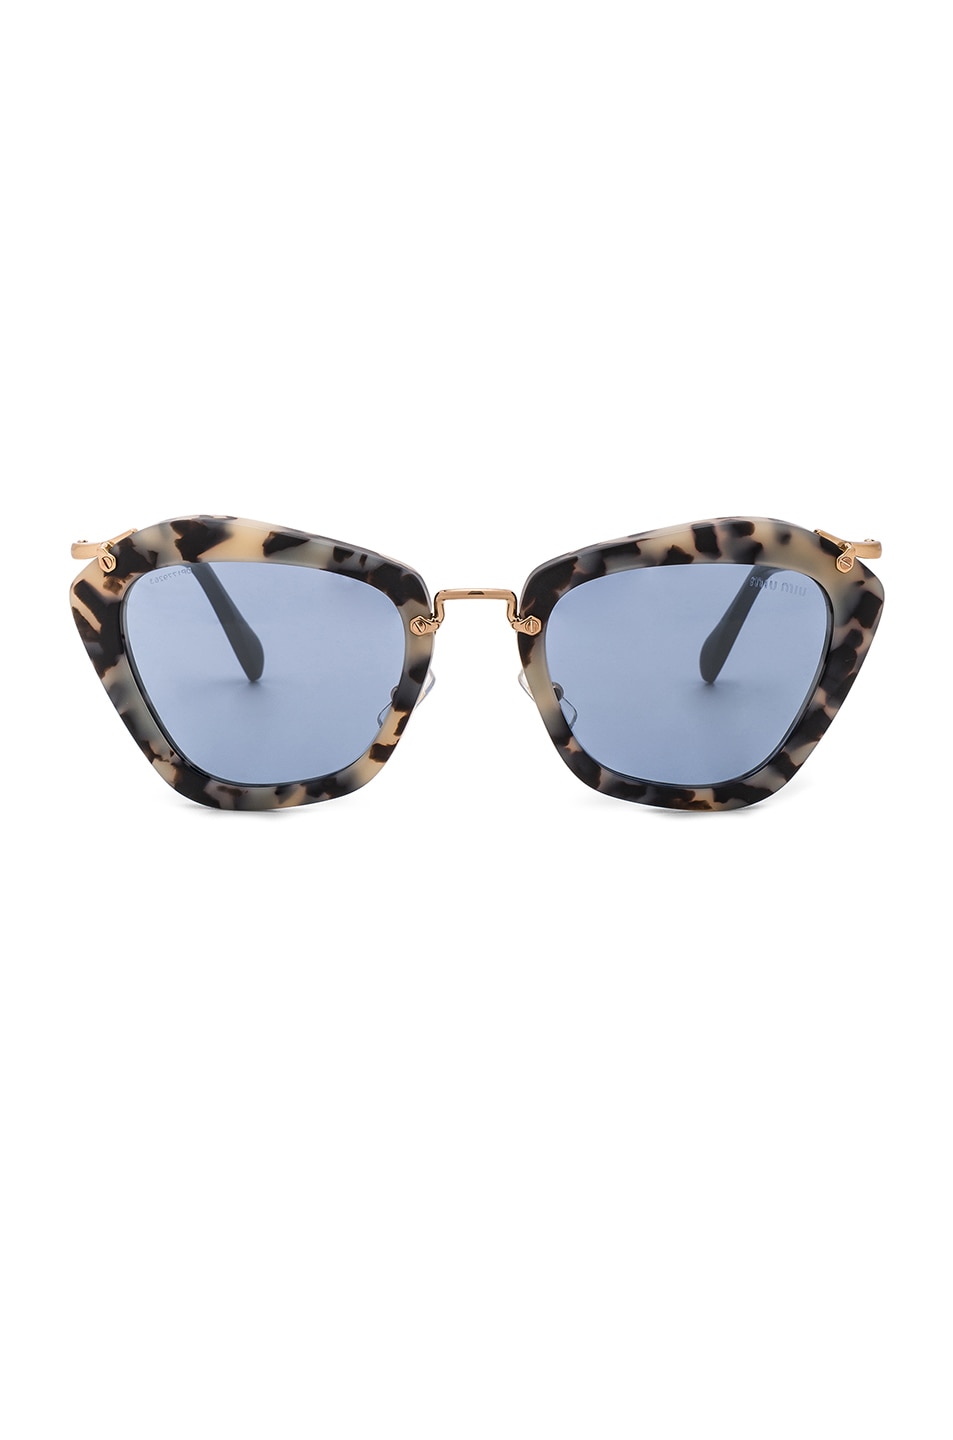 Image 1 of Miu Miu Cat Eye Sunglasses in Sand Havana & Light Blue Mirror